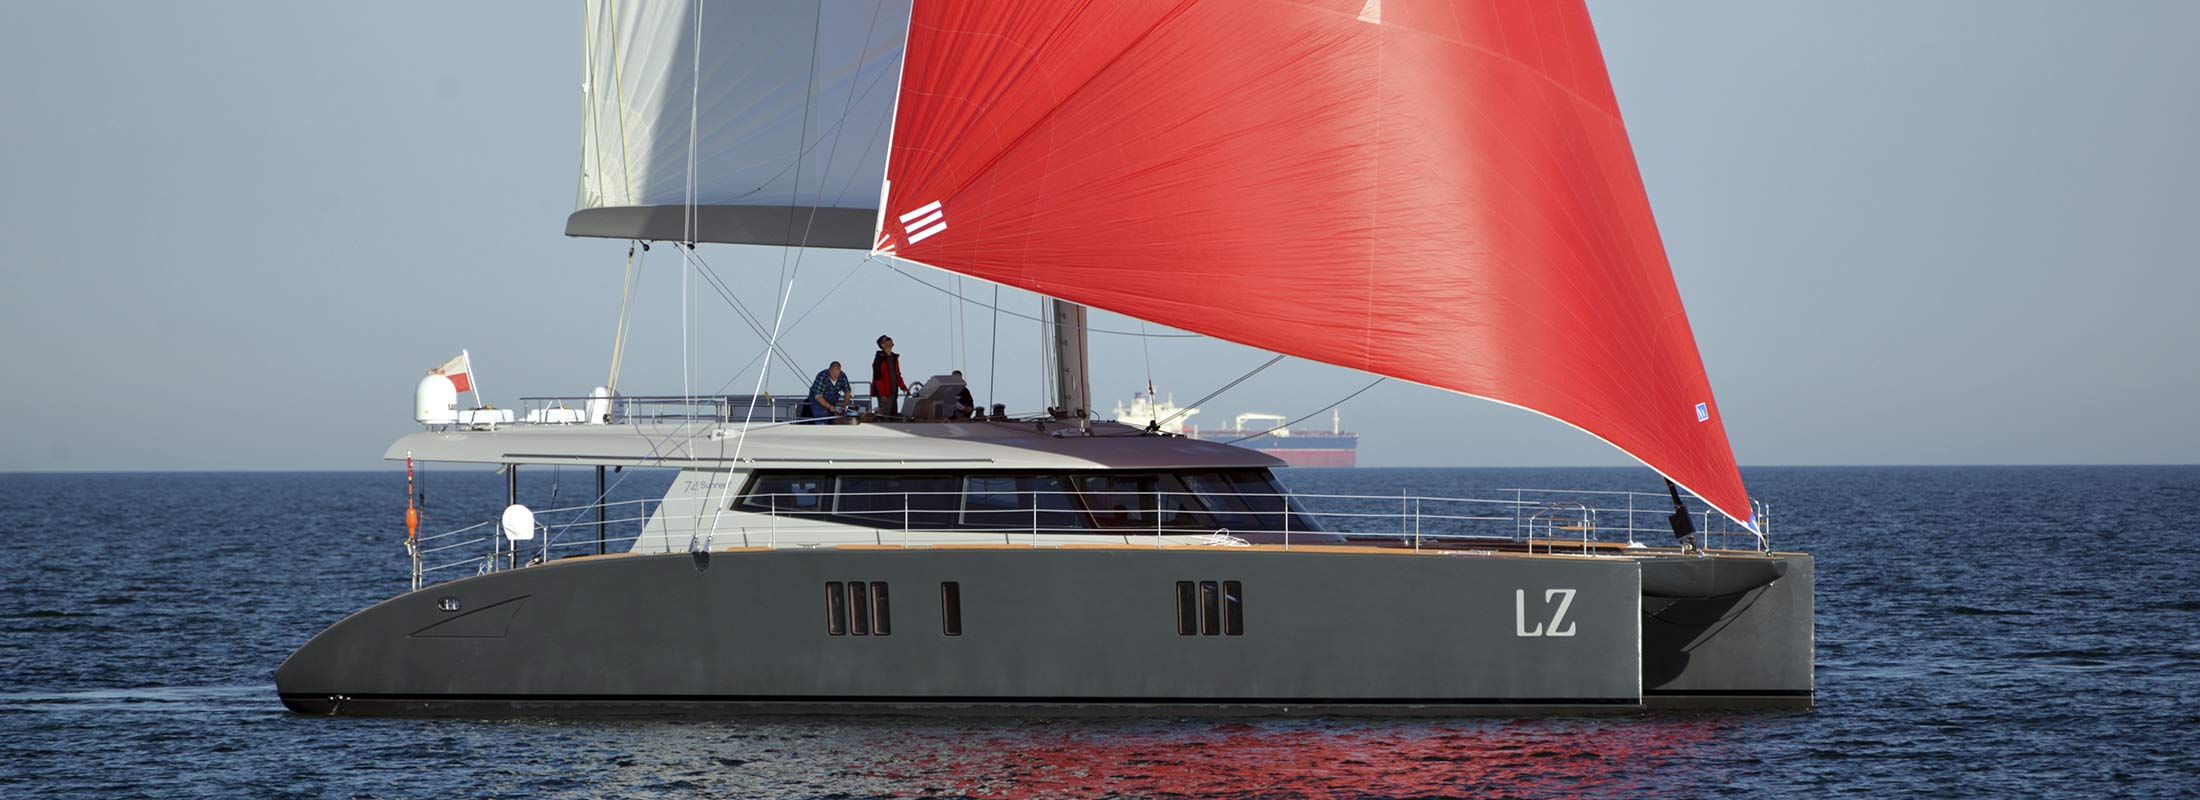 Lucy Z Sailing Yacht for Charter Mediterranean slider 1 